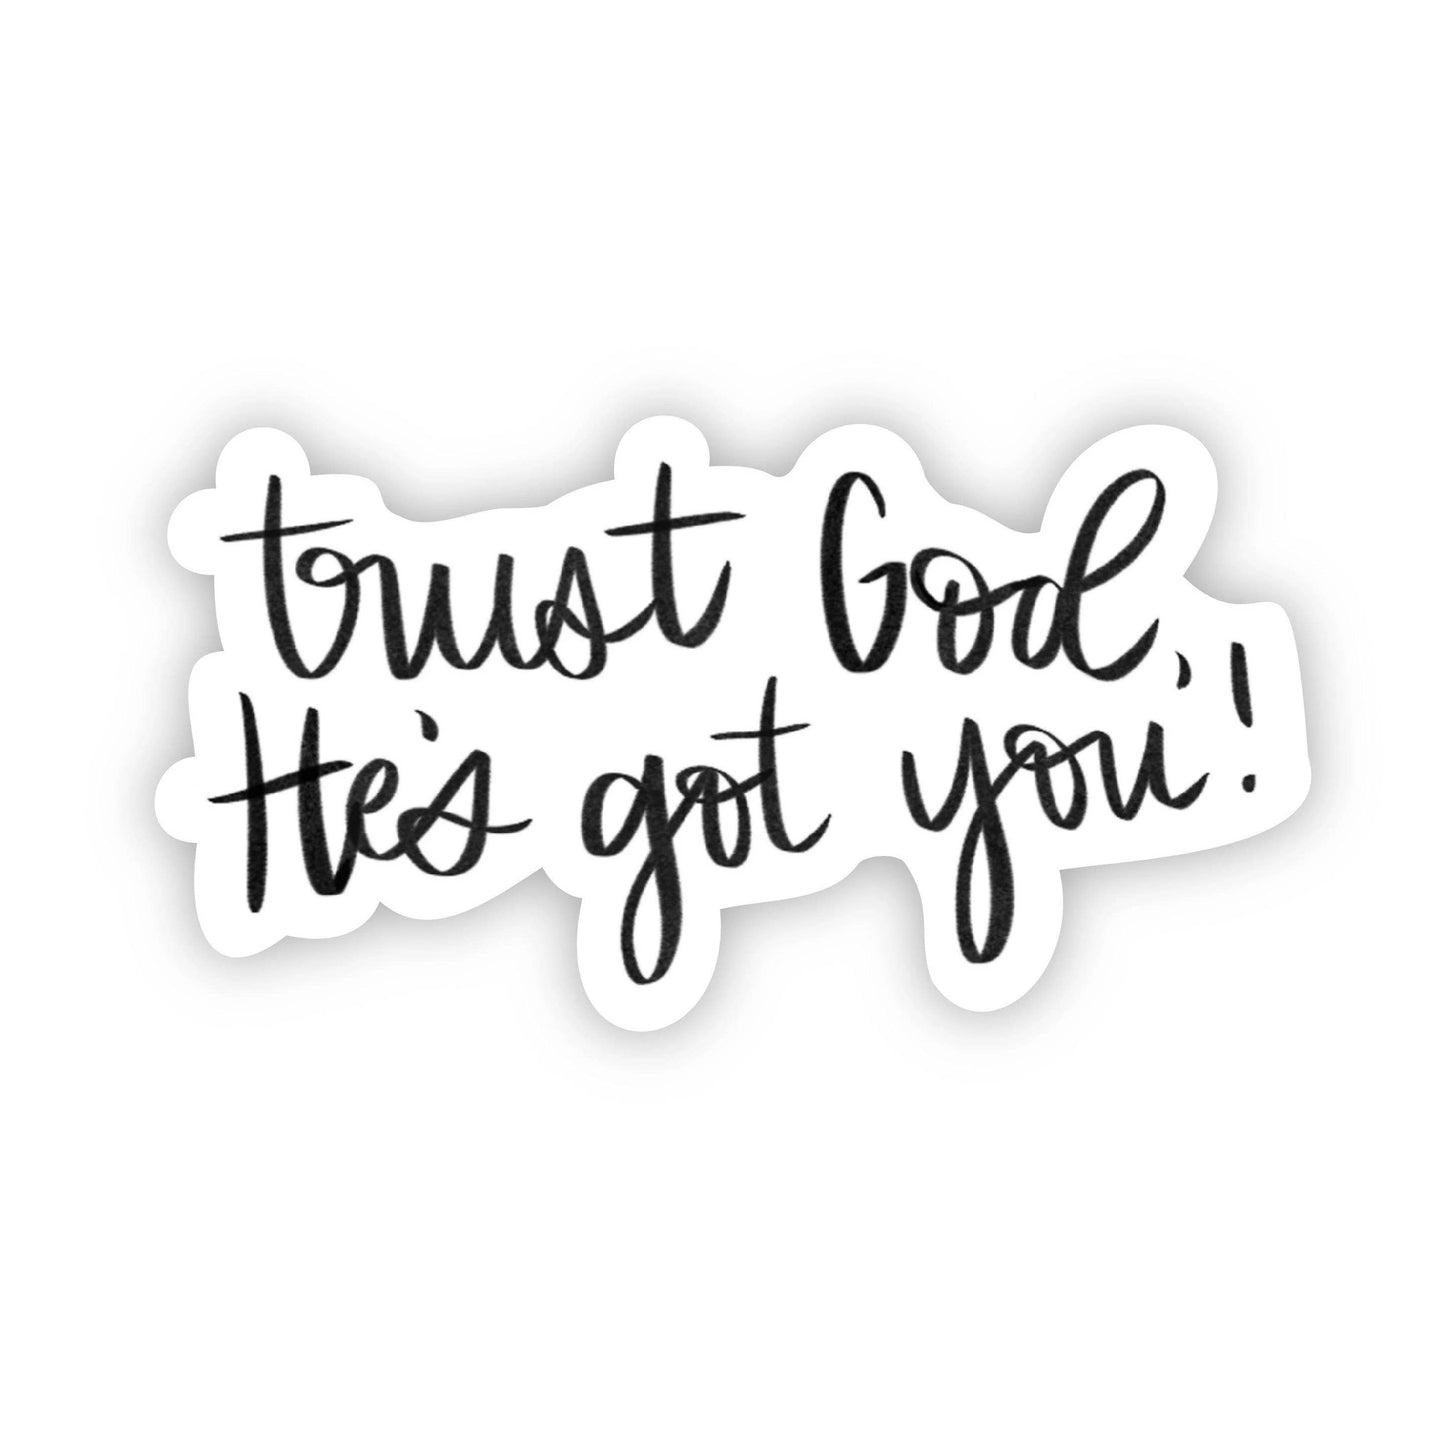 Trust God, He's got you!